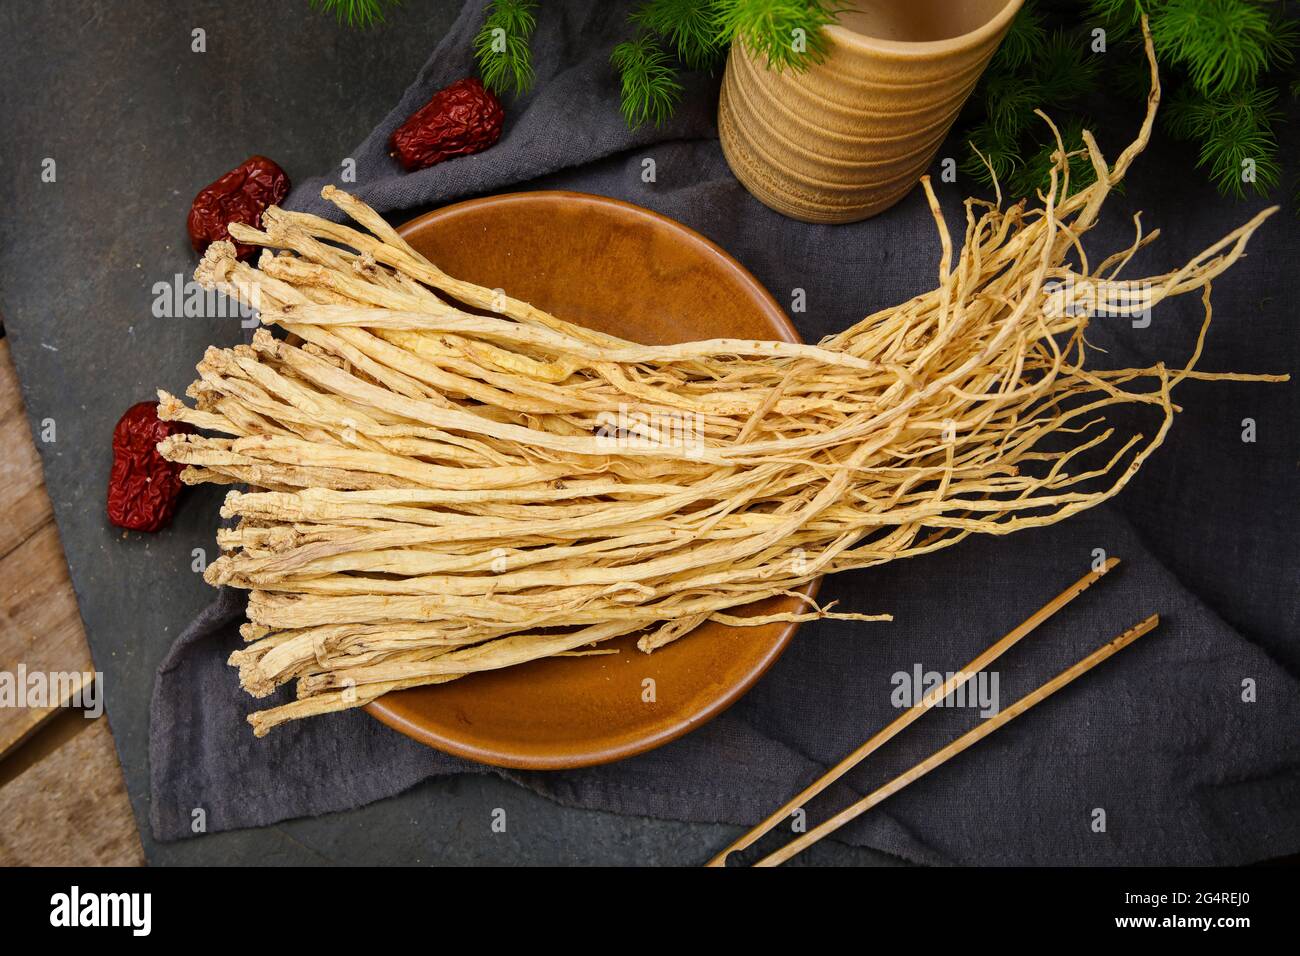 Chinese herbal medicine codonopsis Stock Photo